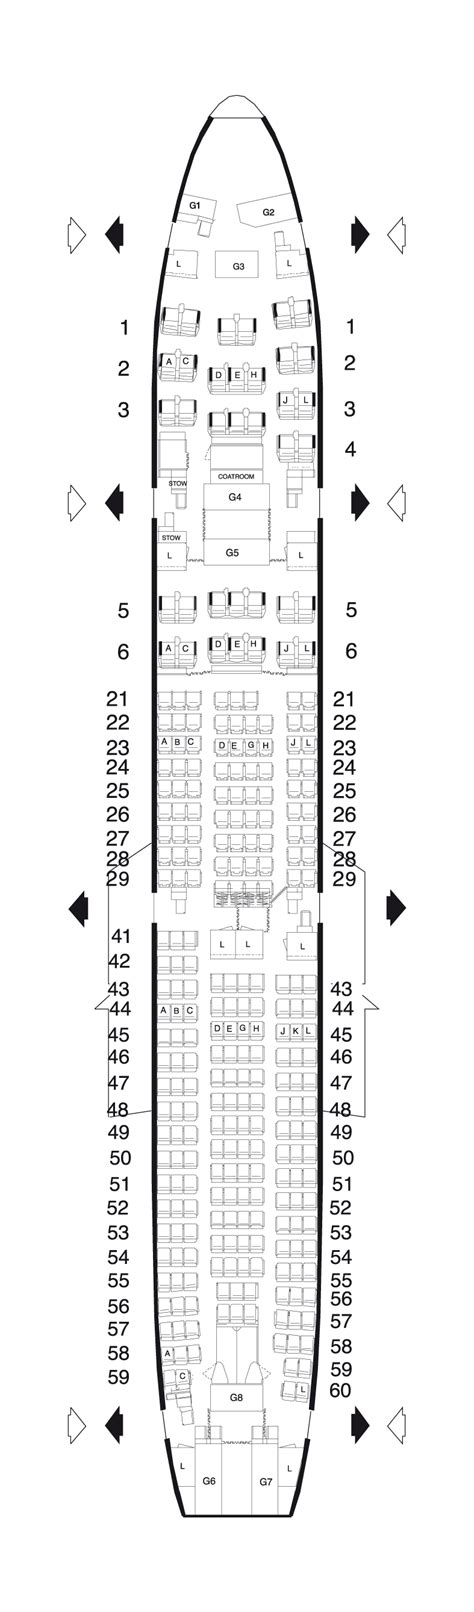 Aircraft Floor Plan